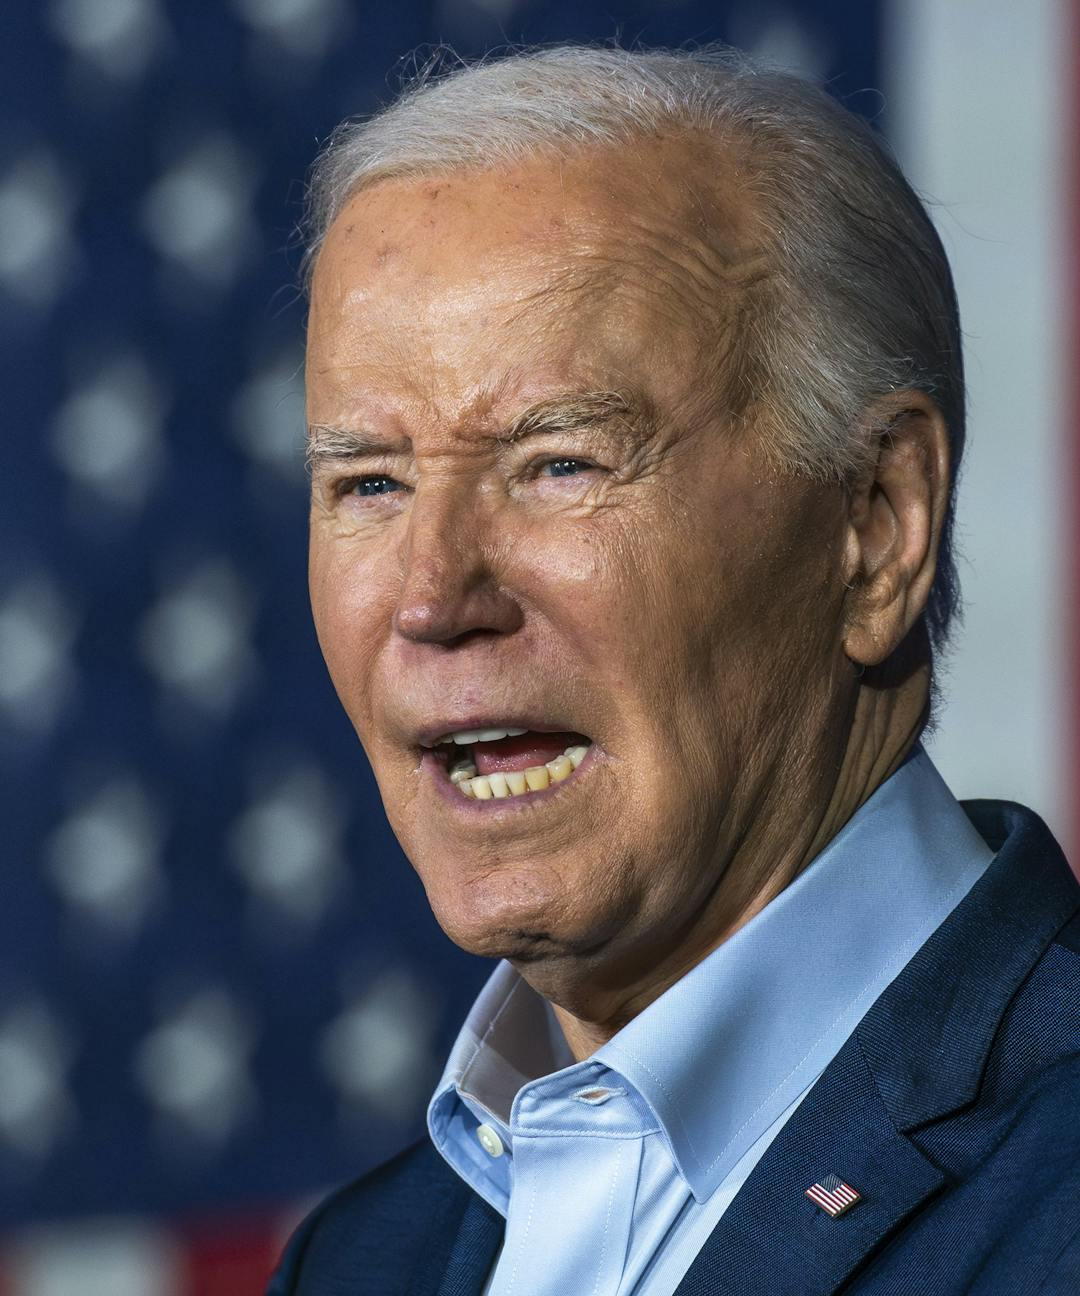 Joe Biden Passes Bill To Ban TikTok And Fund Israel, Ukraine $95 Billion 